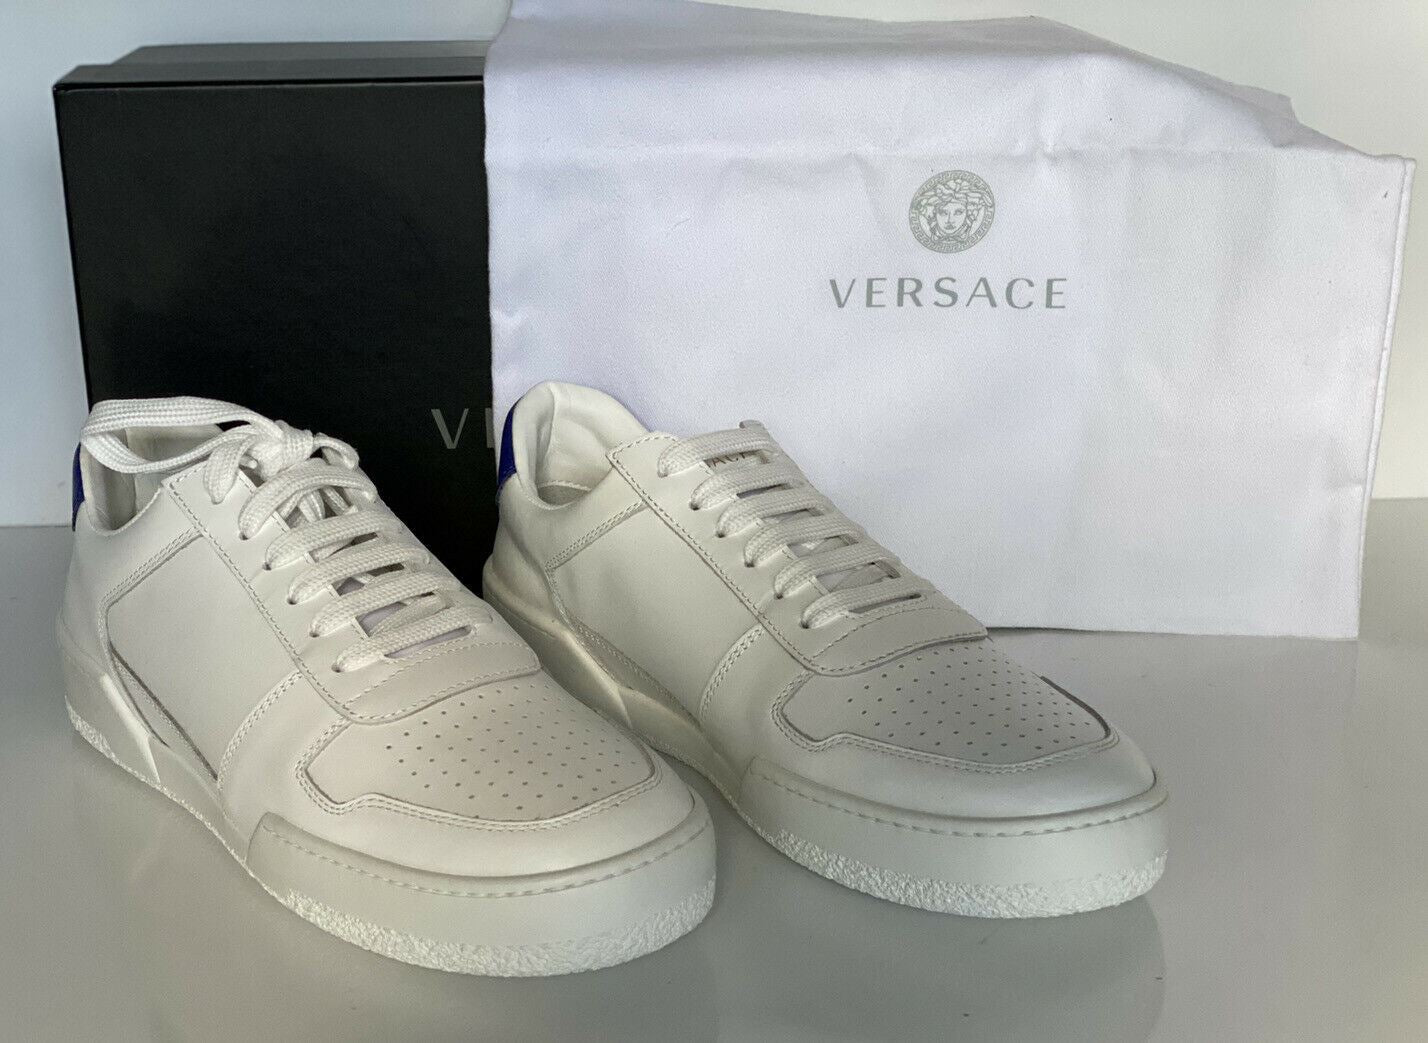 NIB 495 $ Versace Herren-Sneakers aus weißem Leder 8 US (41 Euo) Italien DSU7843 